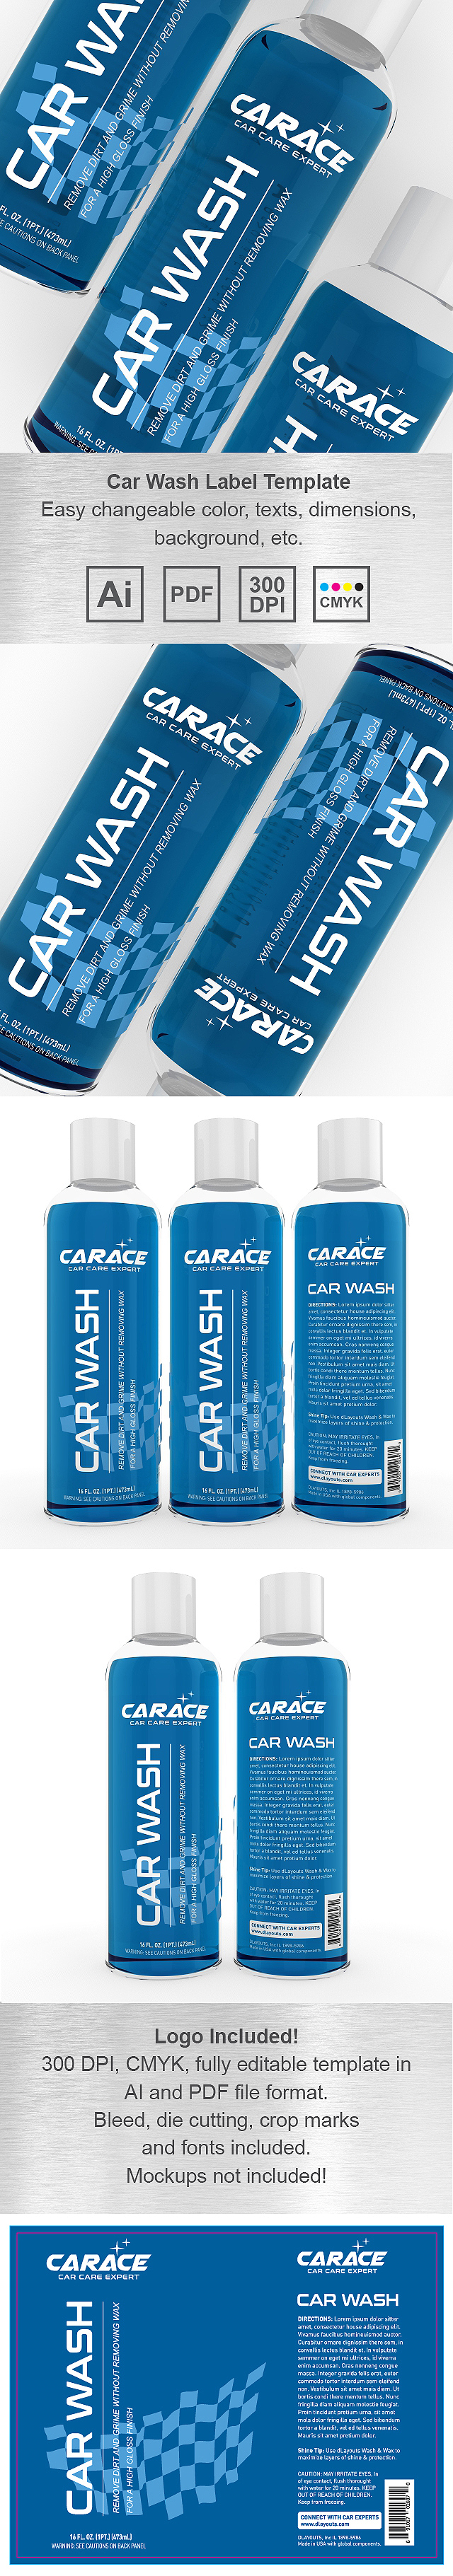 Car Wash Shampoo Label Template